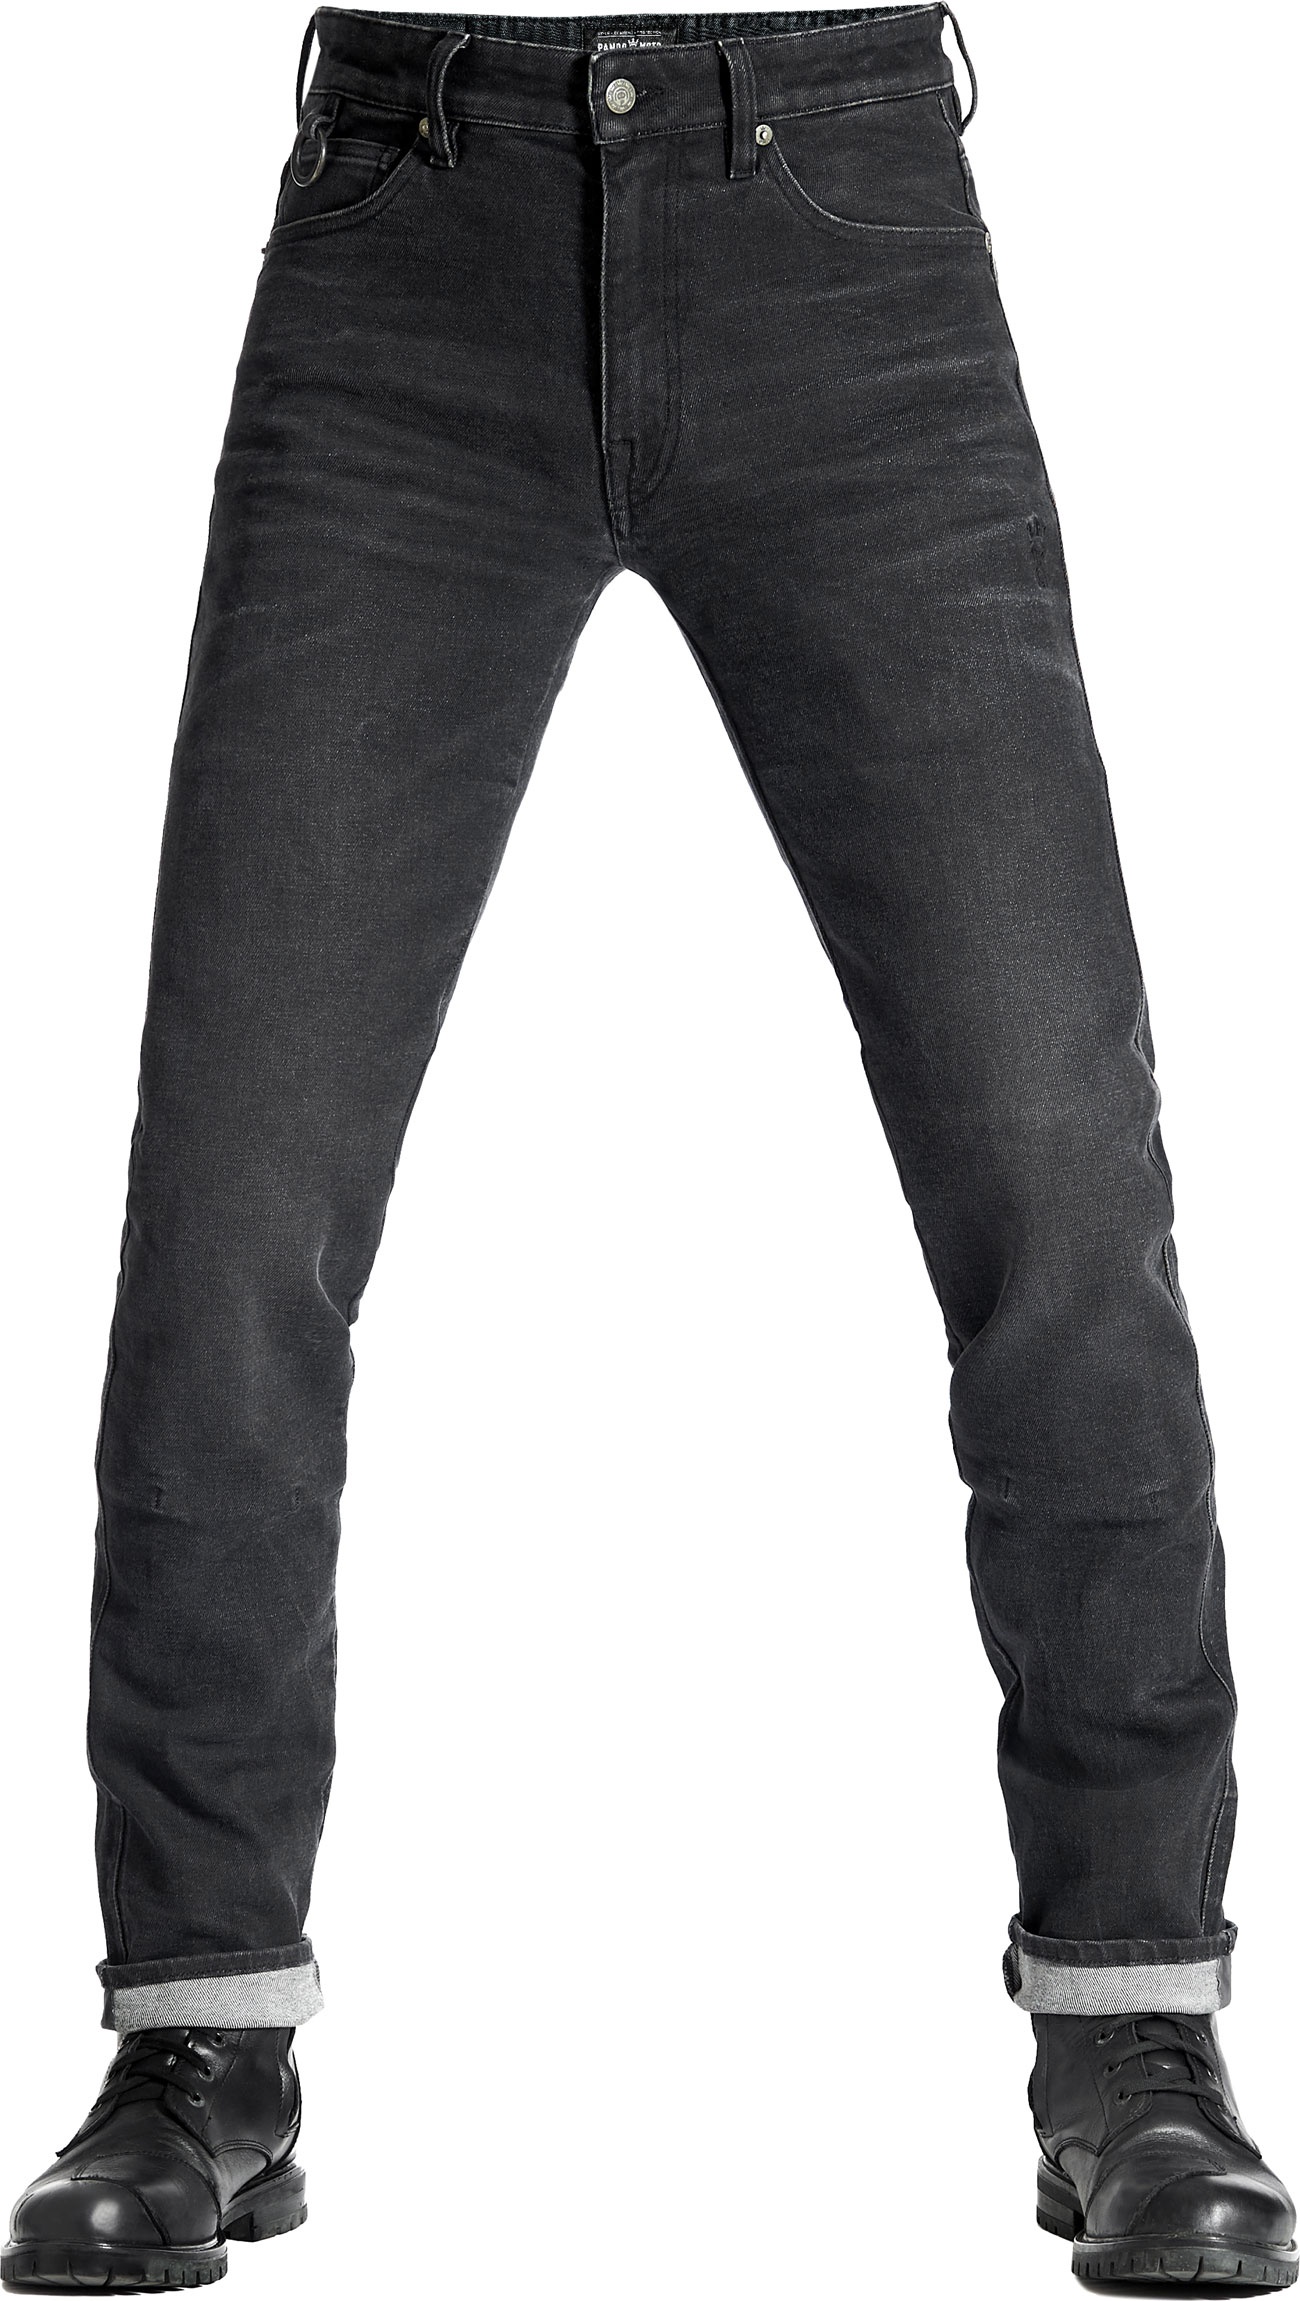 Pando Moto Robby Arm 01, jeans - Noir - W34/L34